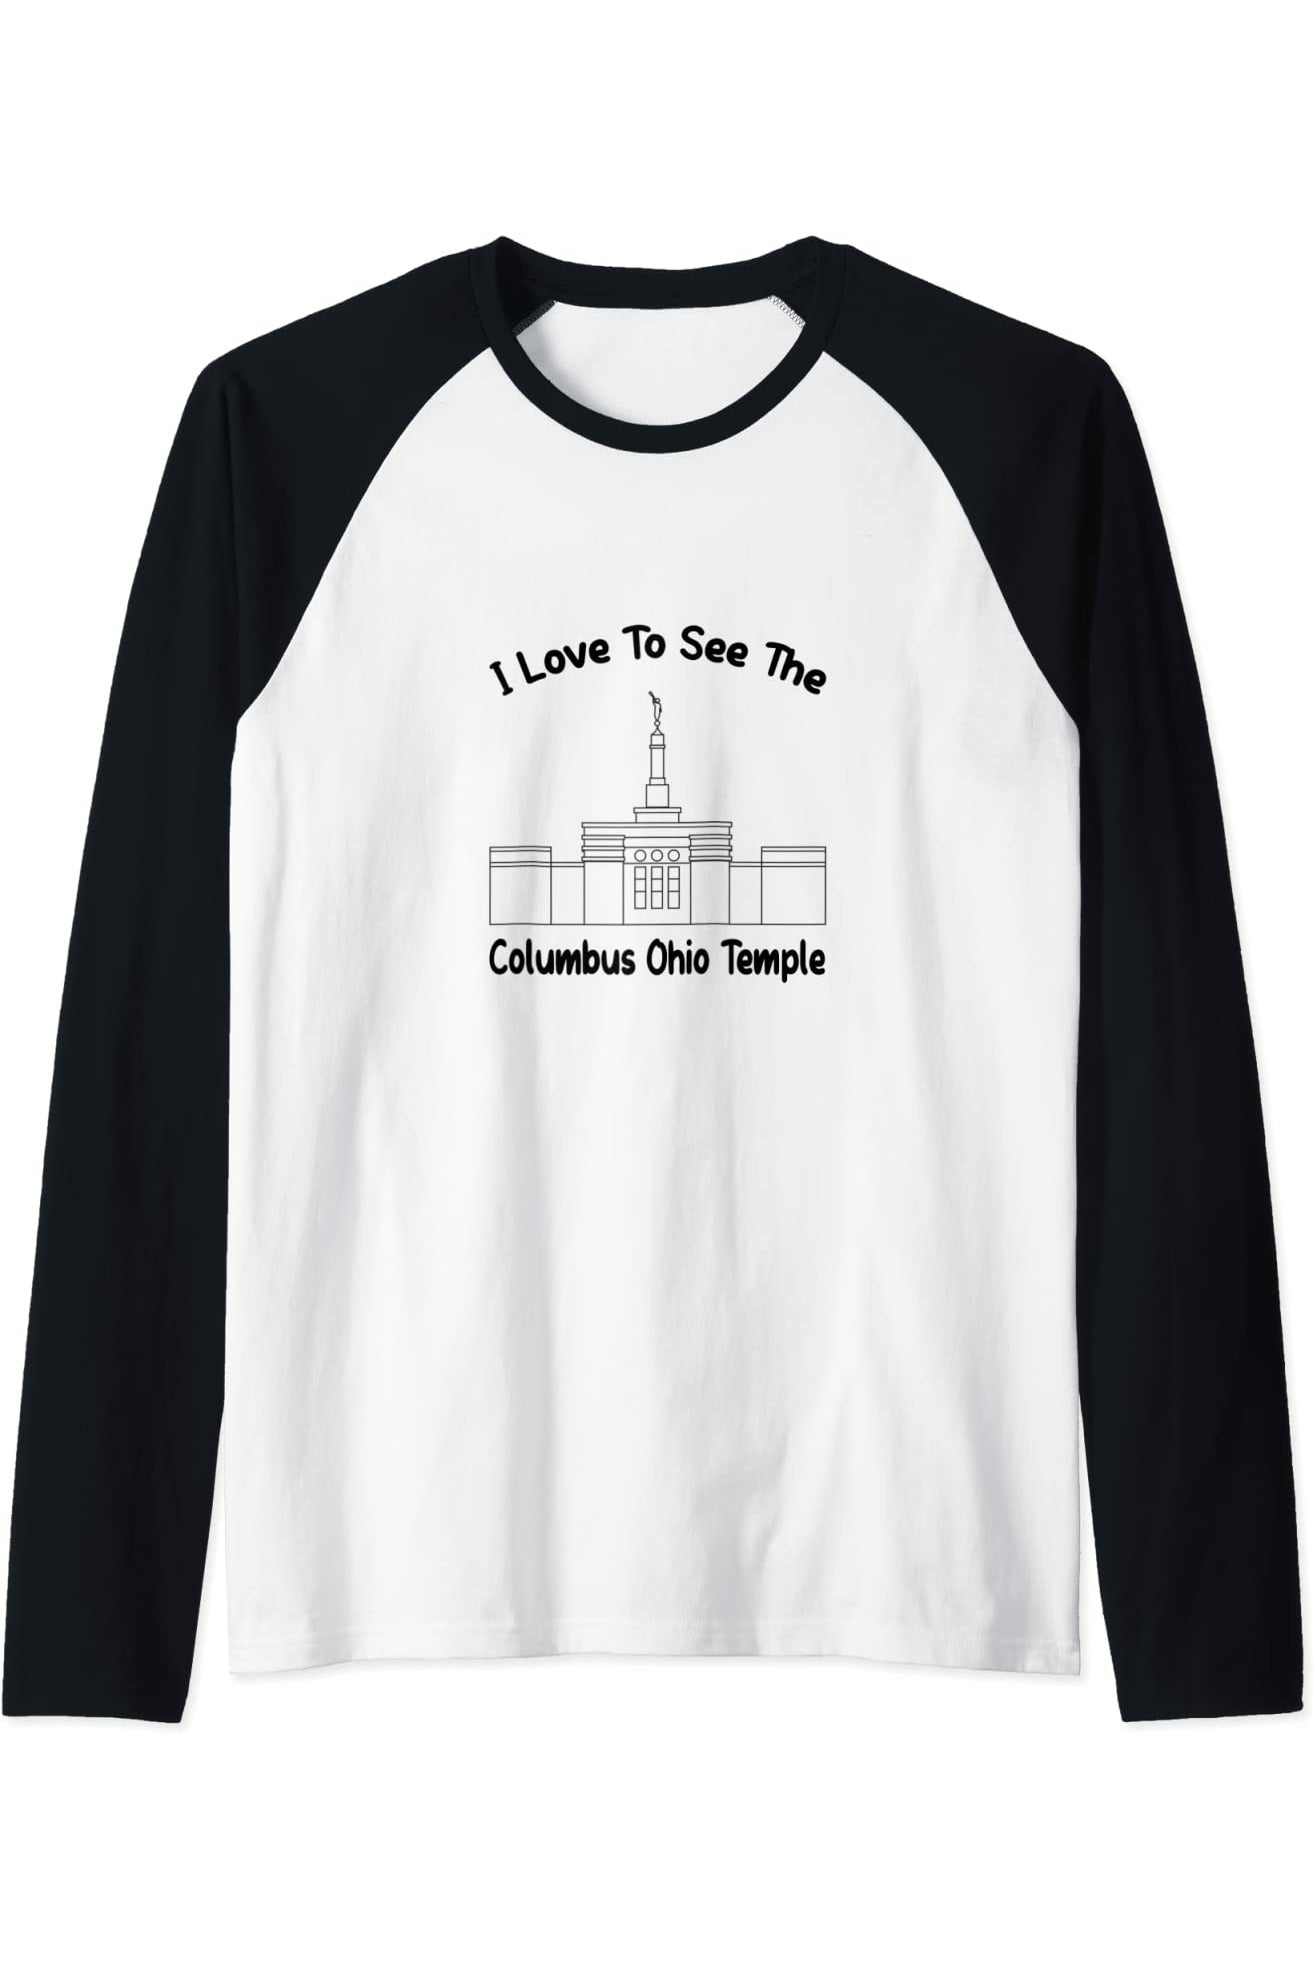 Columbus Ohio Temple Raglan - Primary Style (English) US